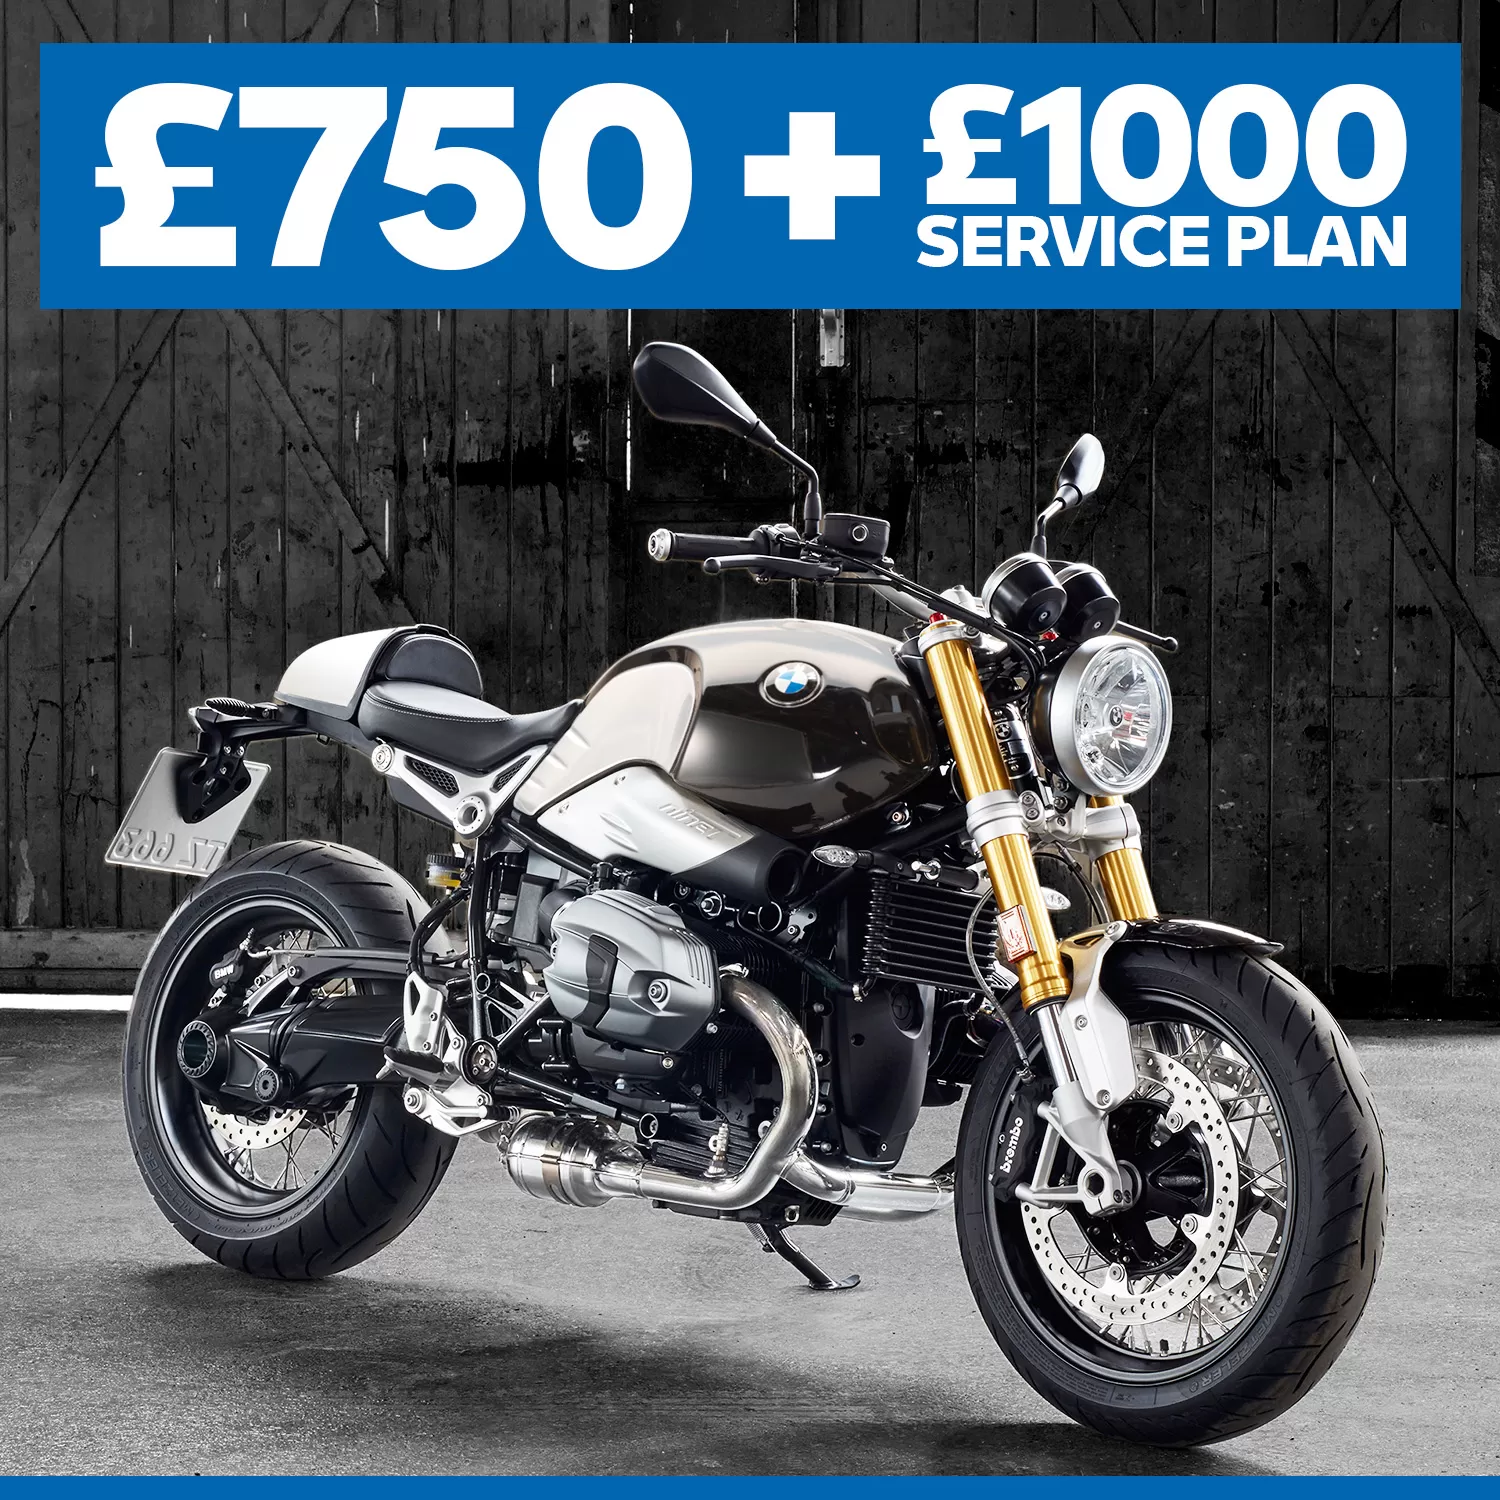 BMW R nineT £750 & £1000 Service Plan Offer